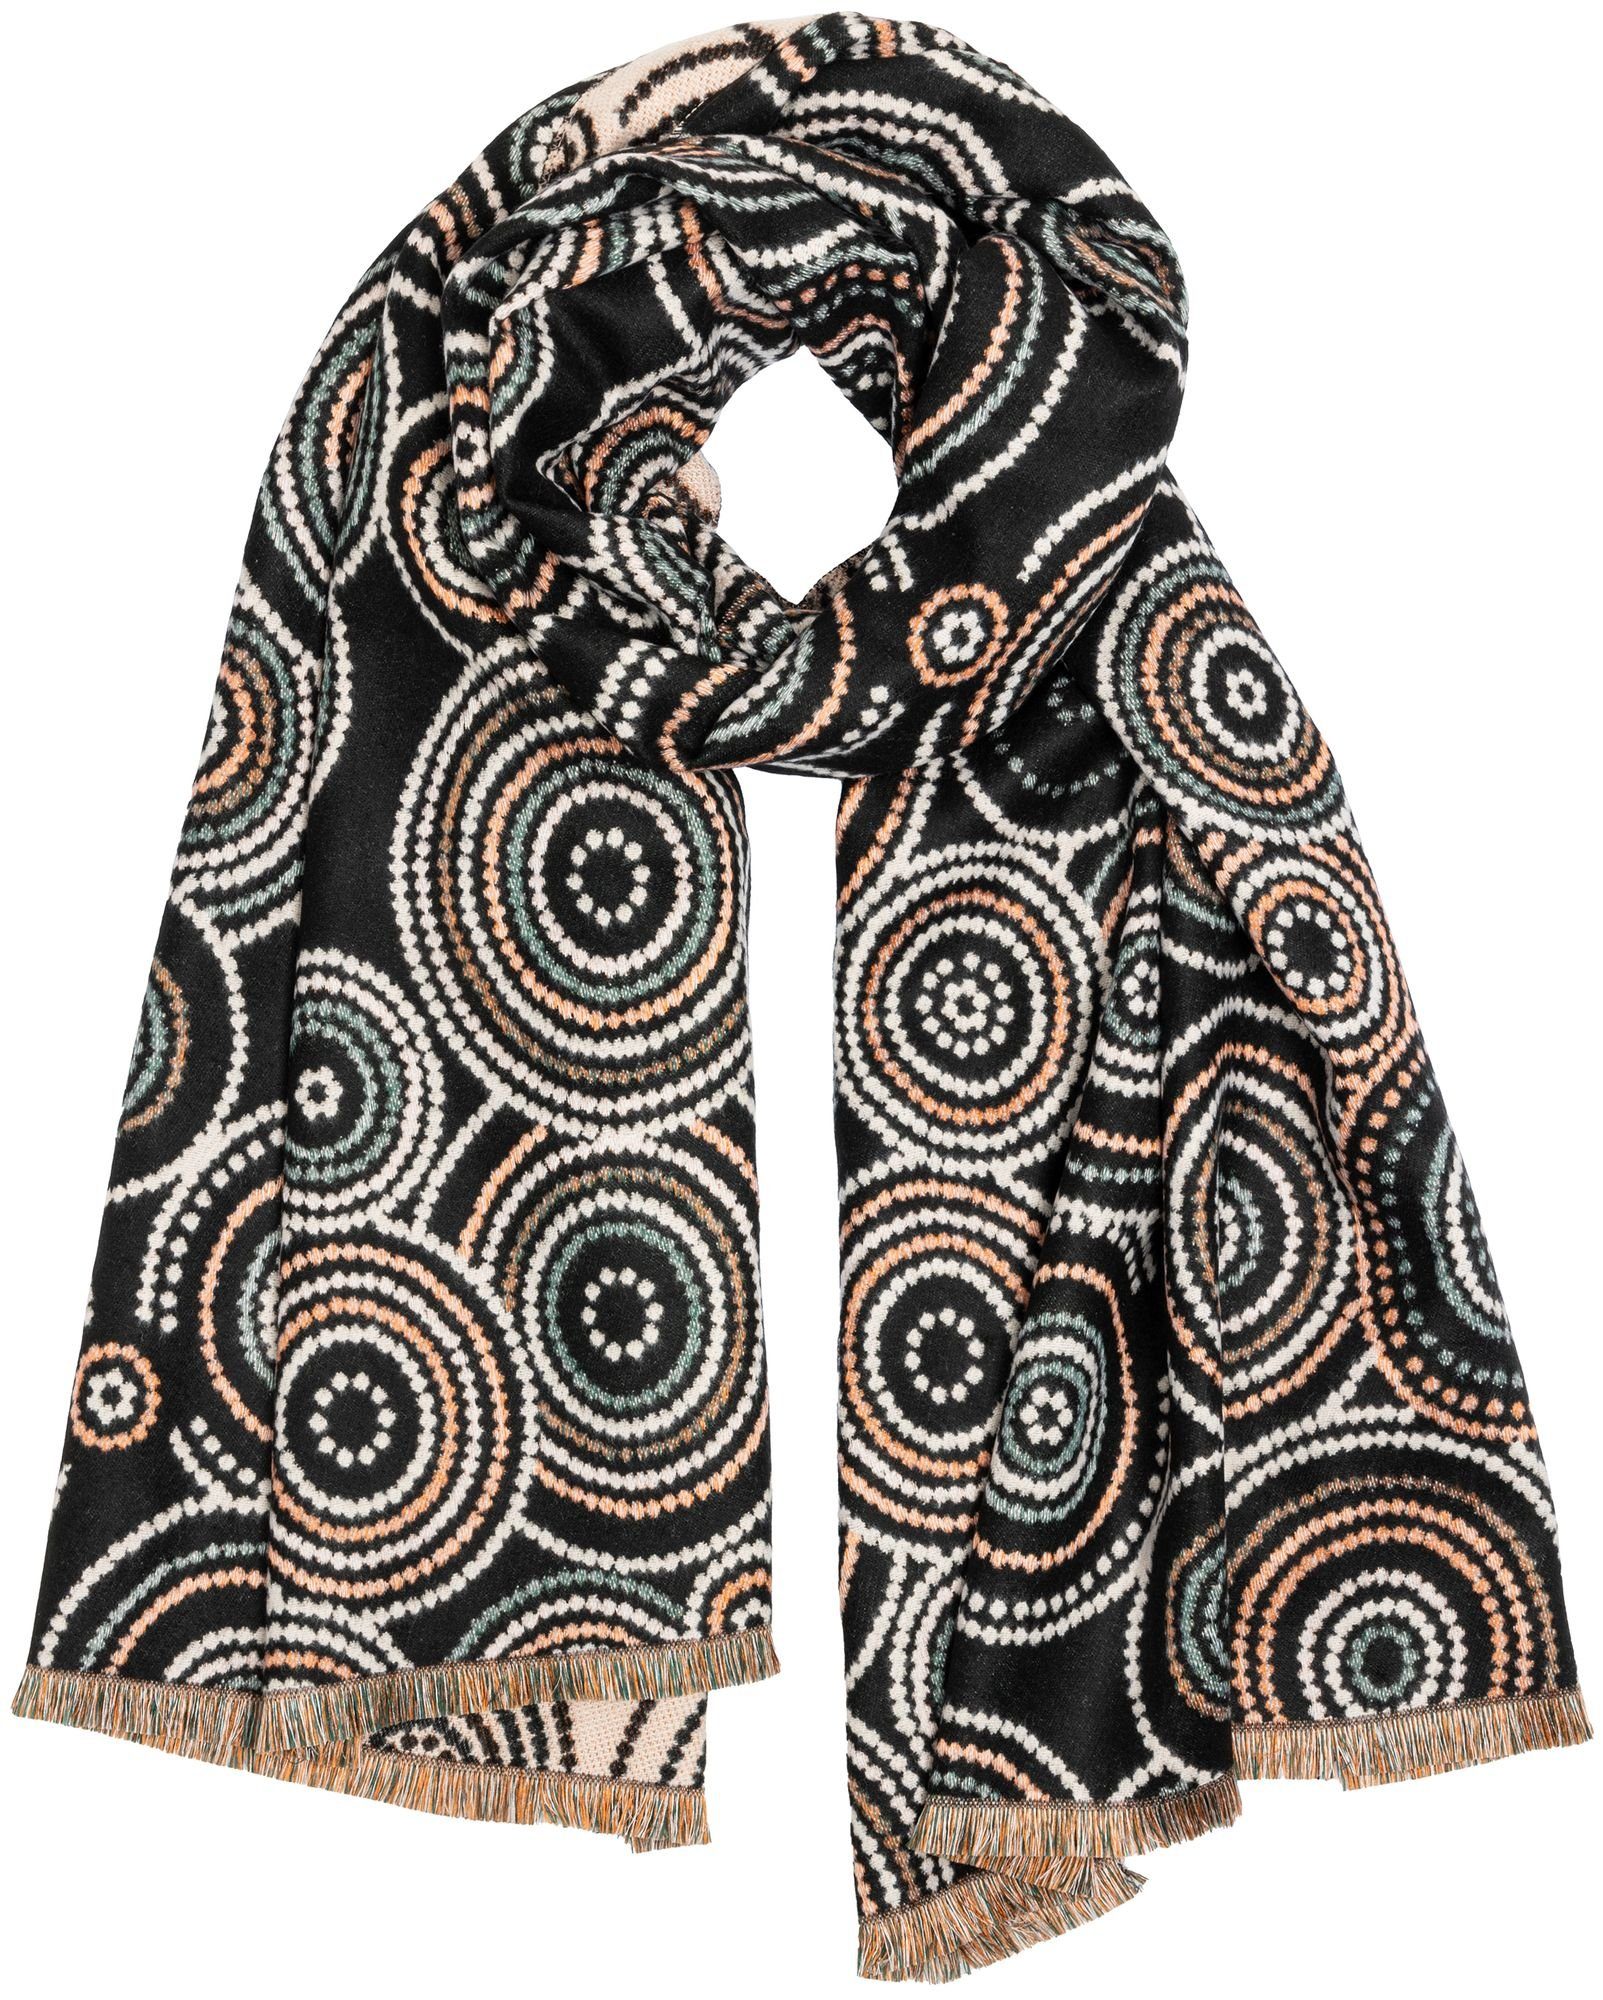 Caspar Modeschal SC524 Damen warmer XXL Winter Schal mit klassischem Paisley Muster schwarz